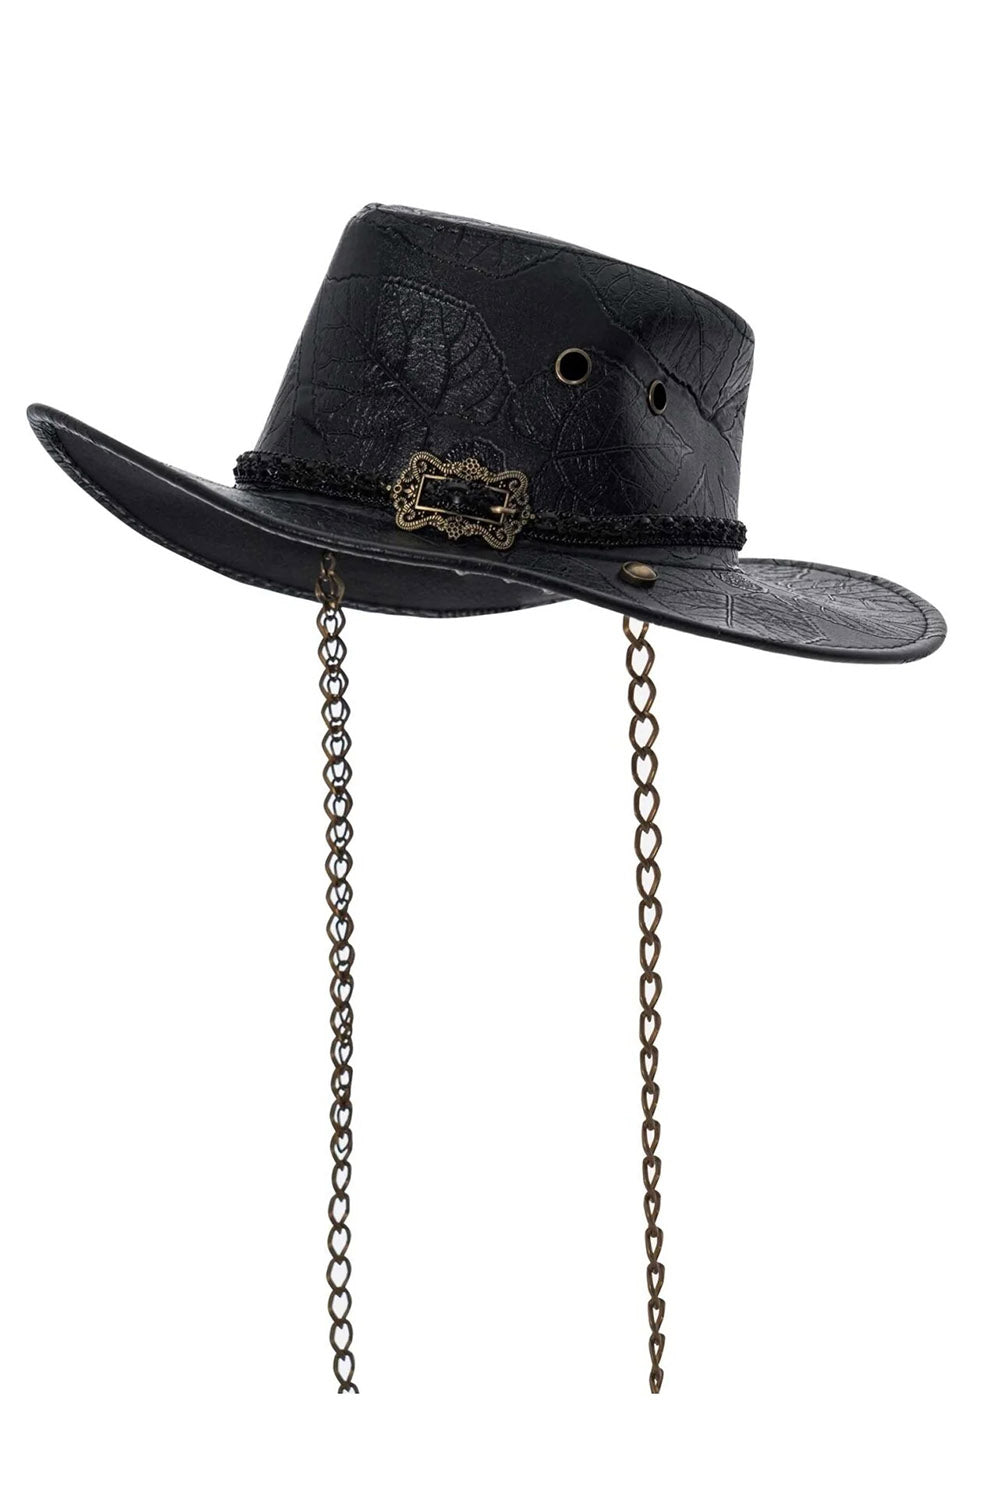 Southern Gothic Cowboy Hat